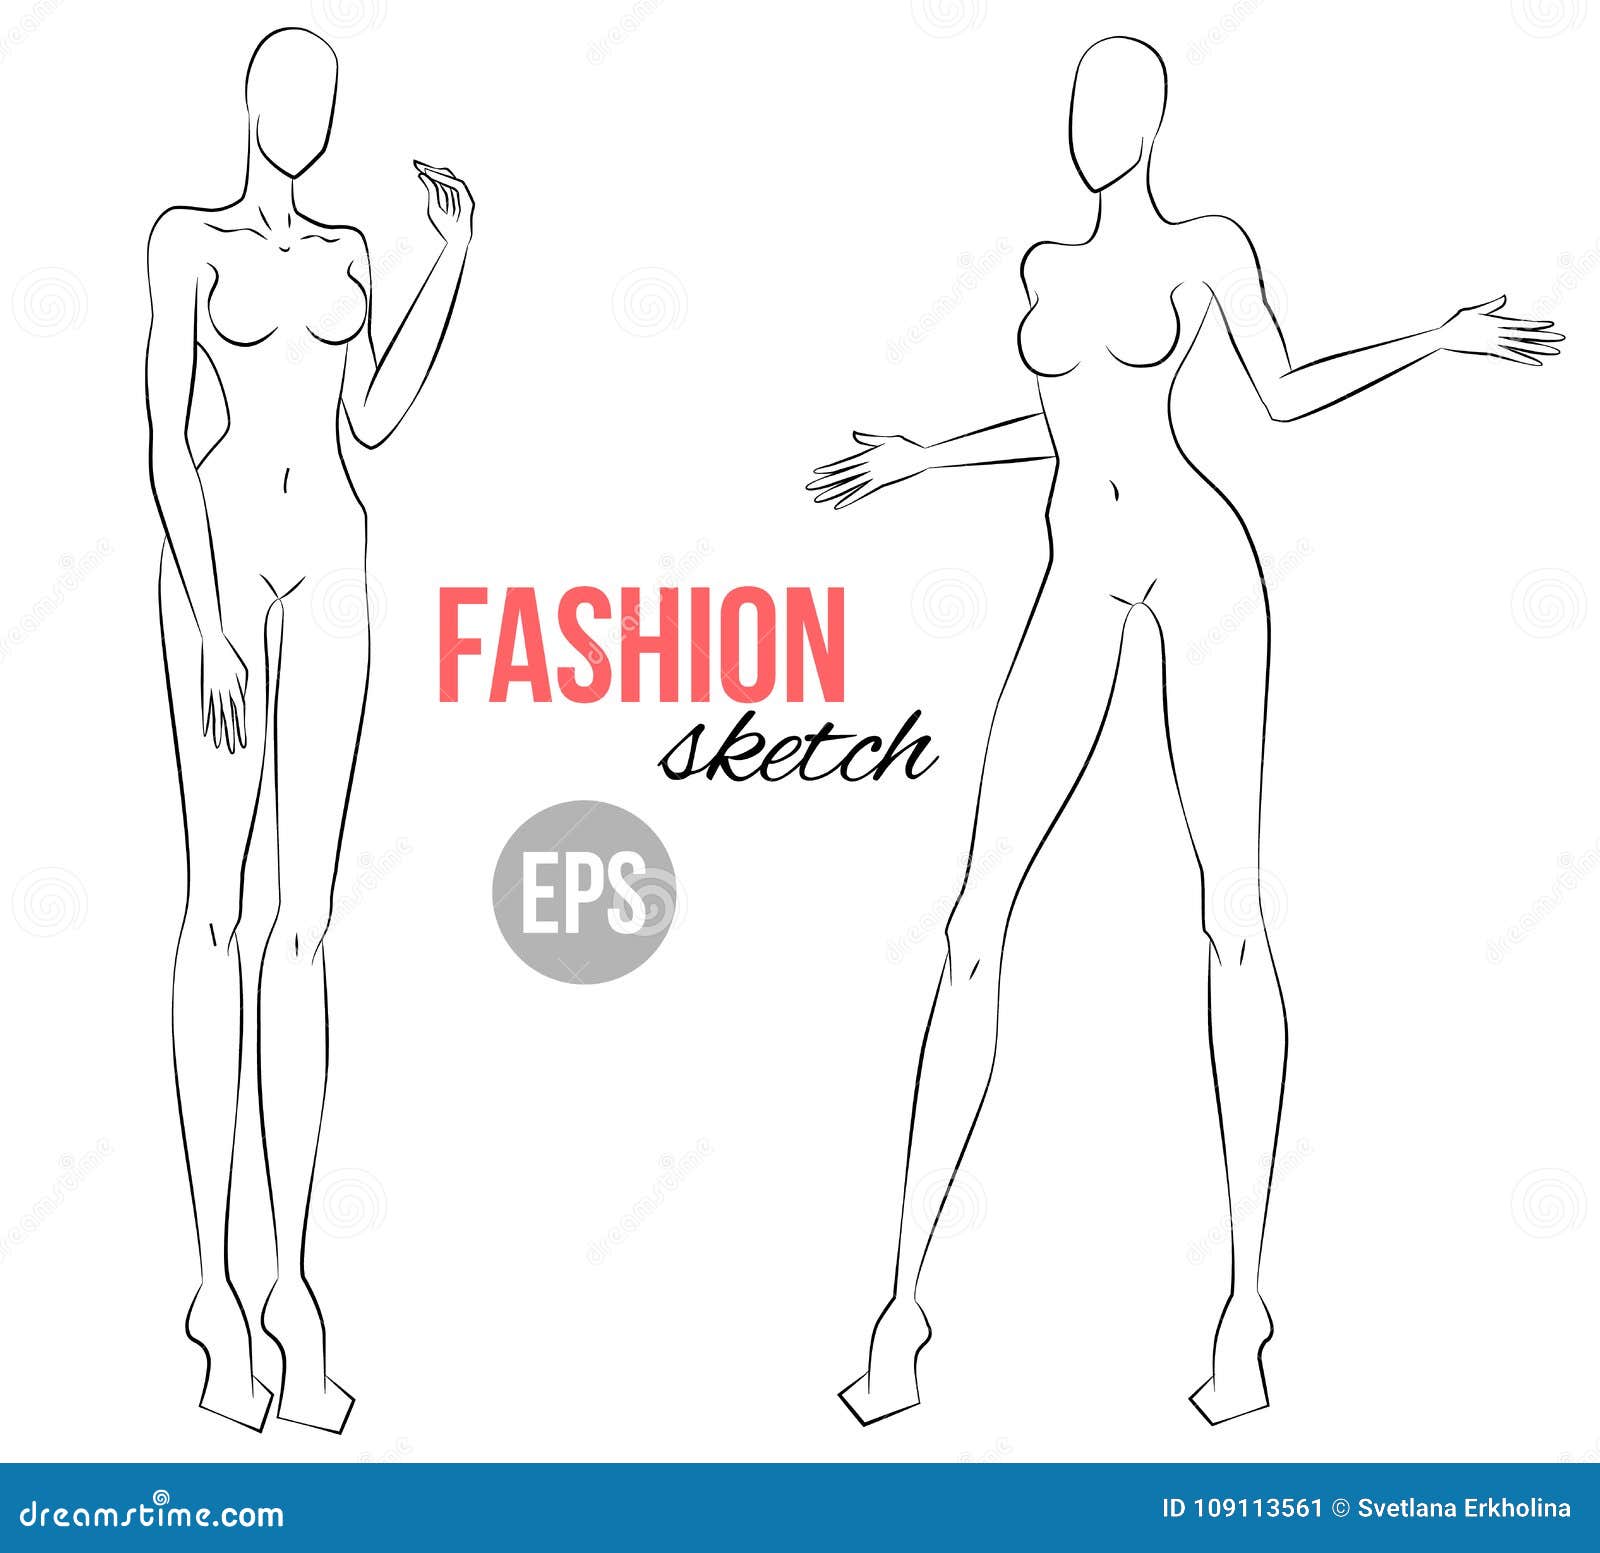 Premium Vector | Female body sketch line drawing of elegant figure  attractive poses